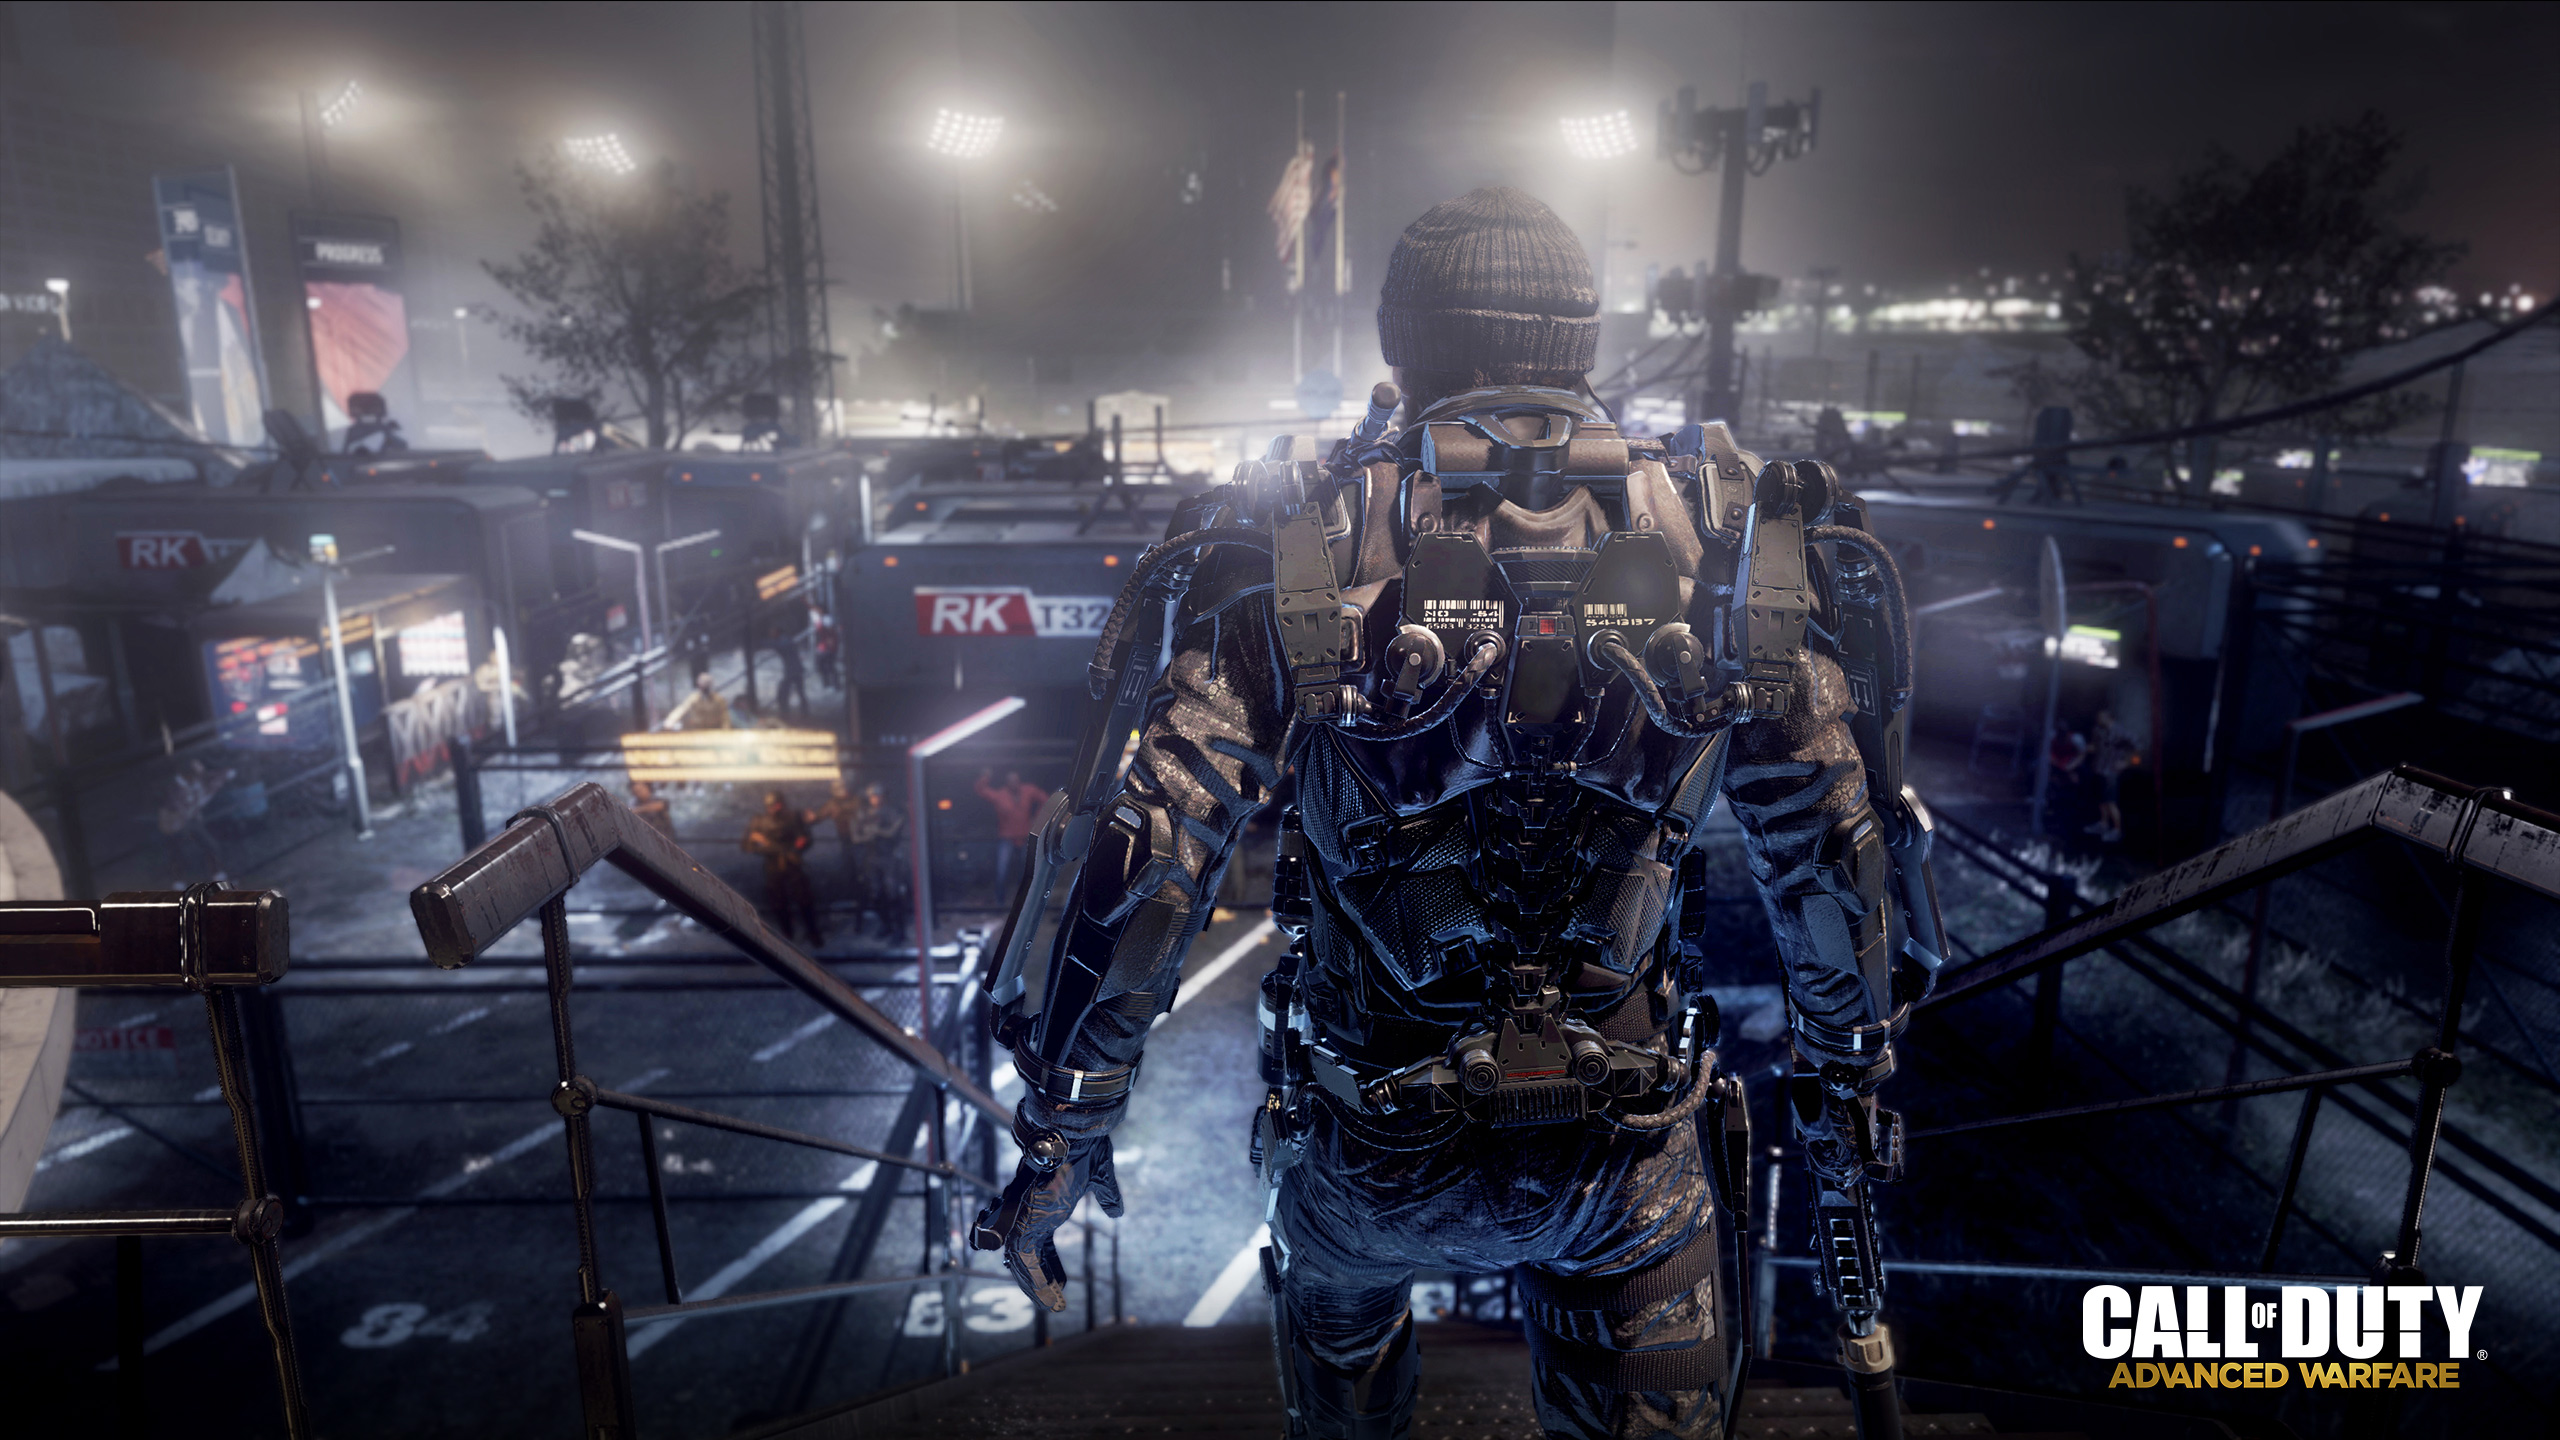 Call Of Duty Advanced Warfare Full HD Wallpaper And